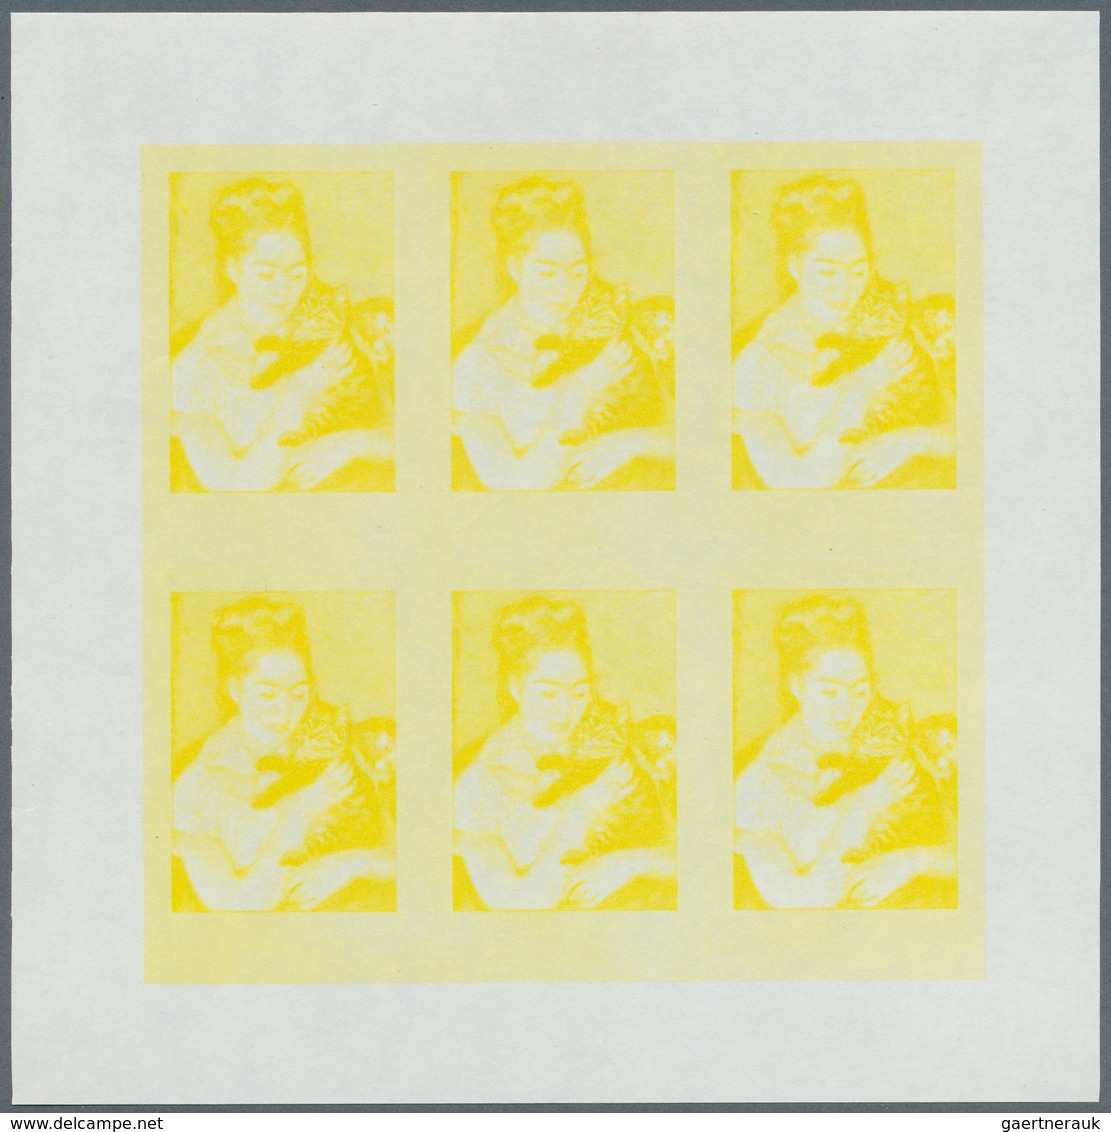 25192 Thematik: Malerei, Maler / painting, painters: 1968, Burundi. Progressive proofs set of sheets for t